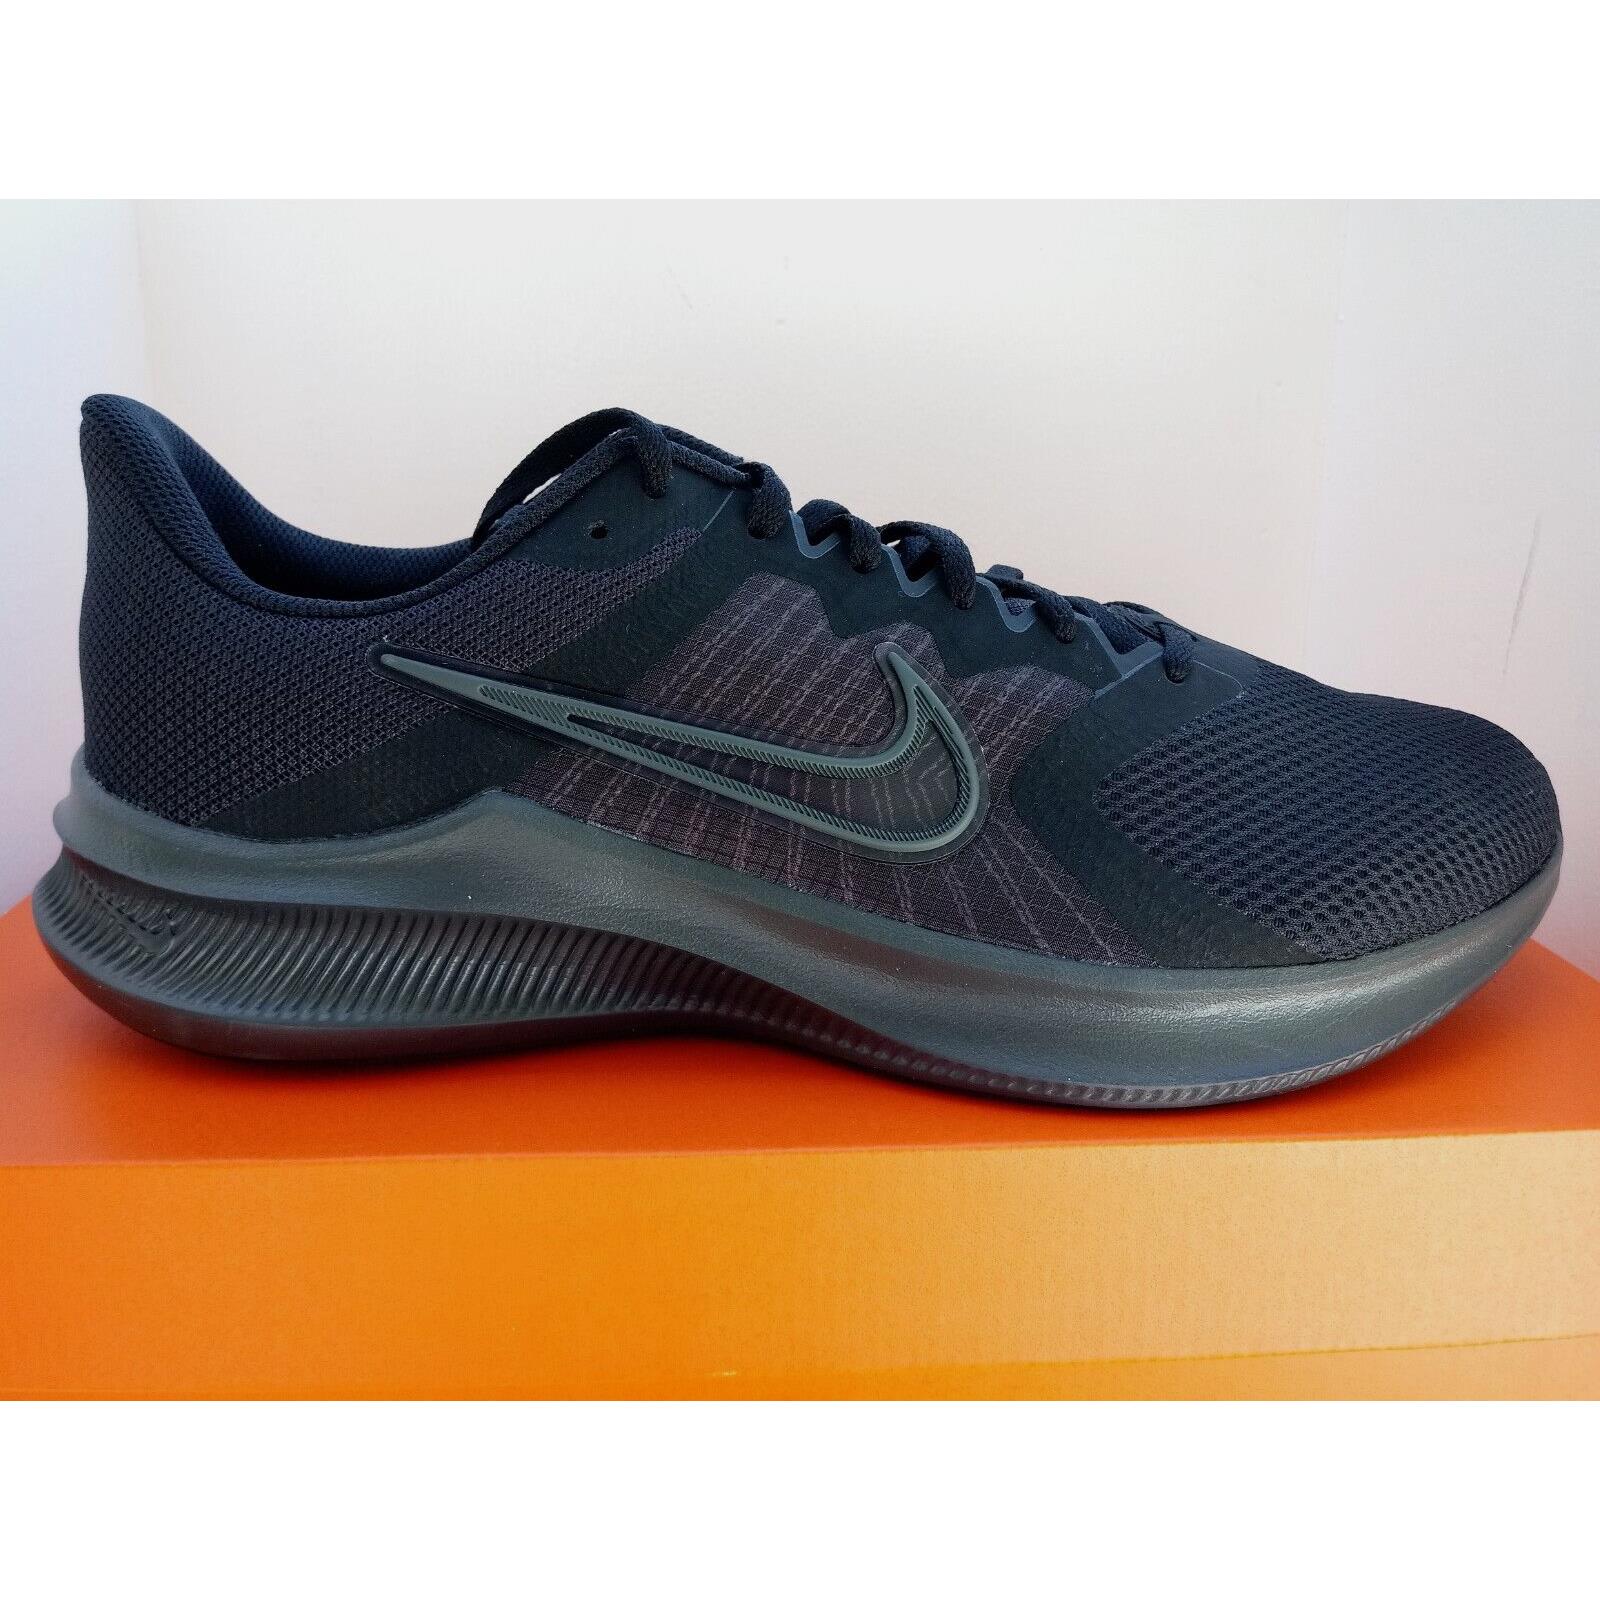 Nike shoes Downshifter - Black 7